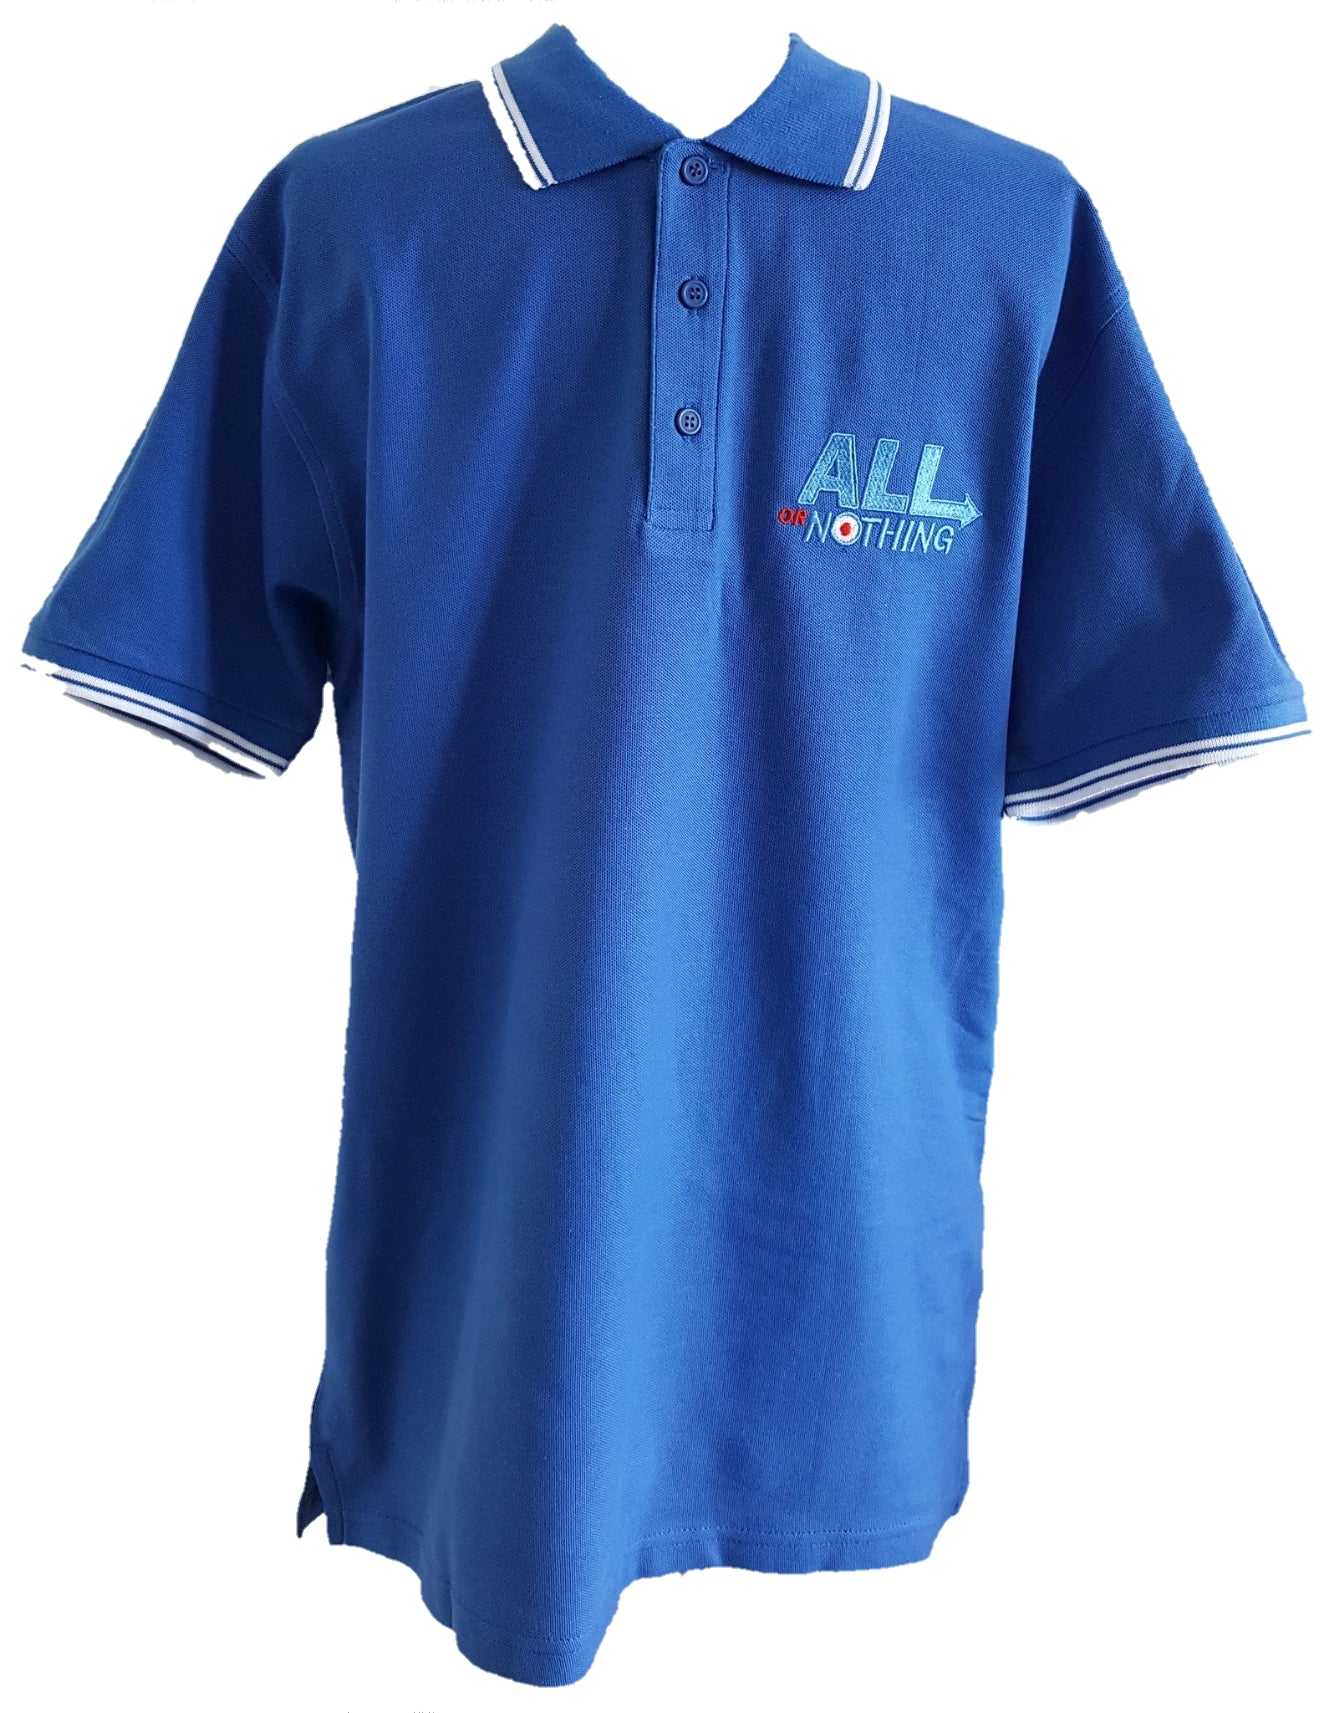 Polo Shirt - Royal Blue